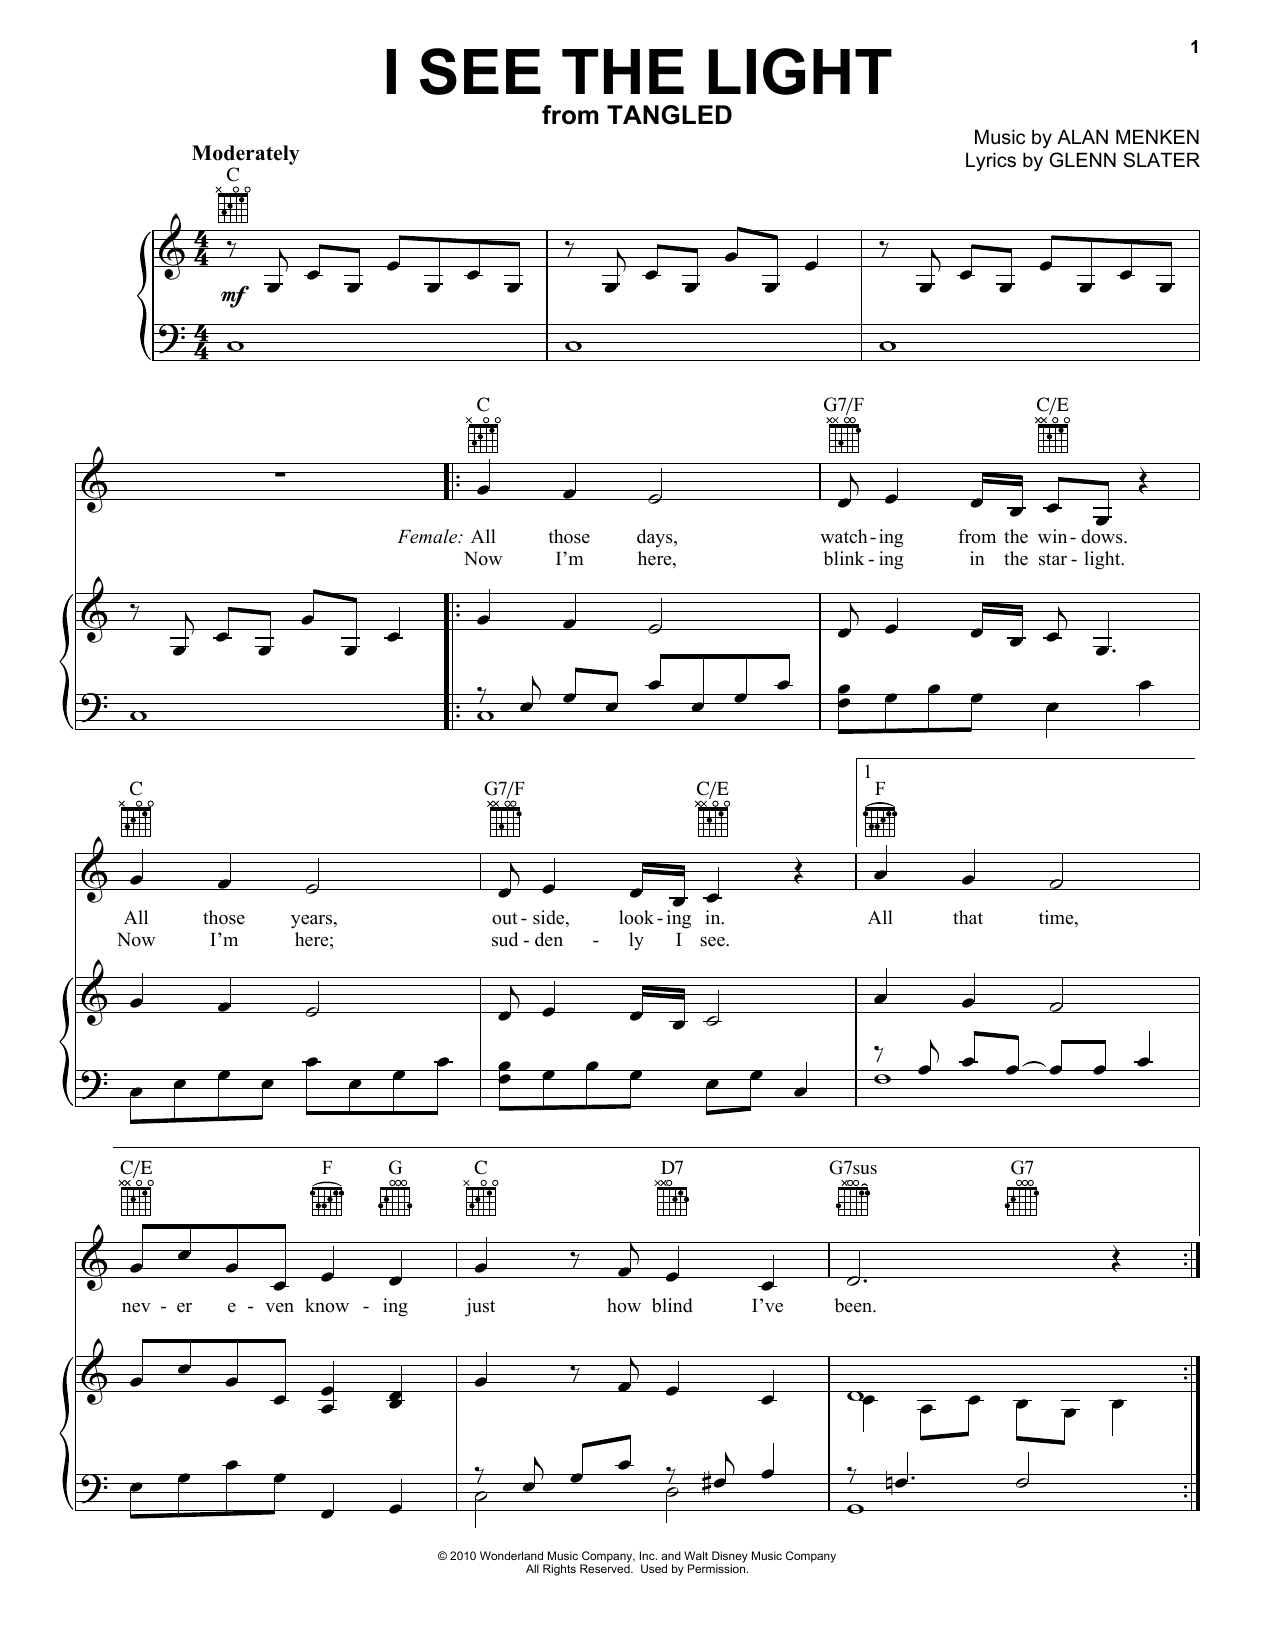 Mandy Moore "I See The Light Disney's Tangled)" Sheet Music Download PDF Score 77203